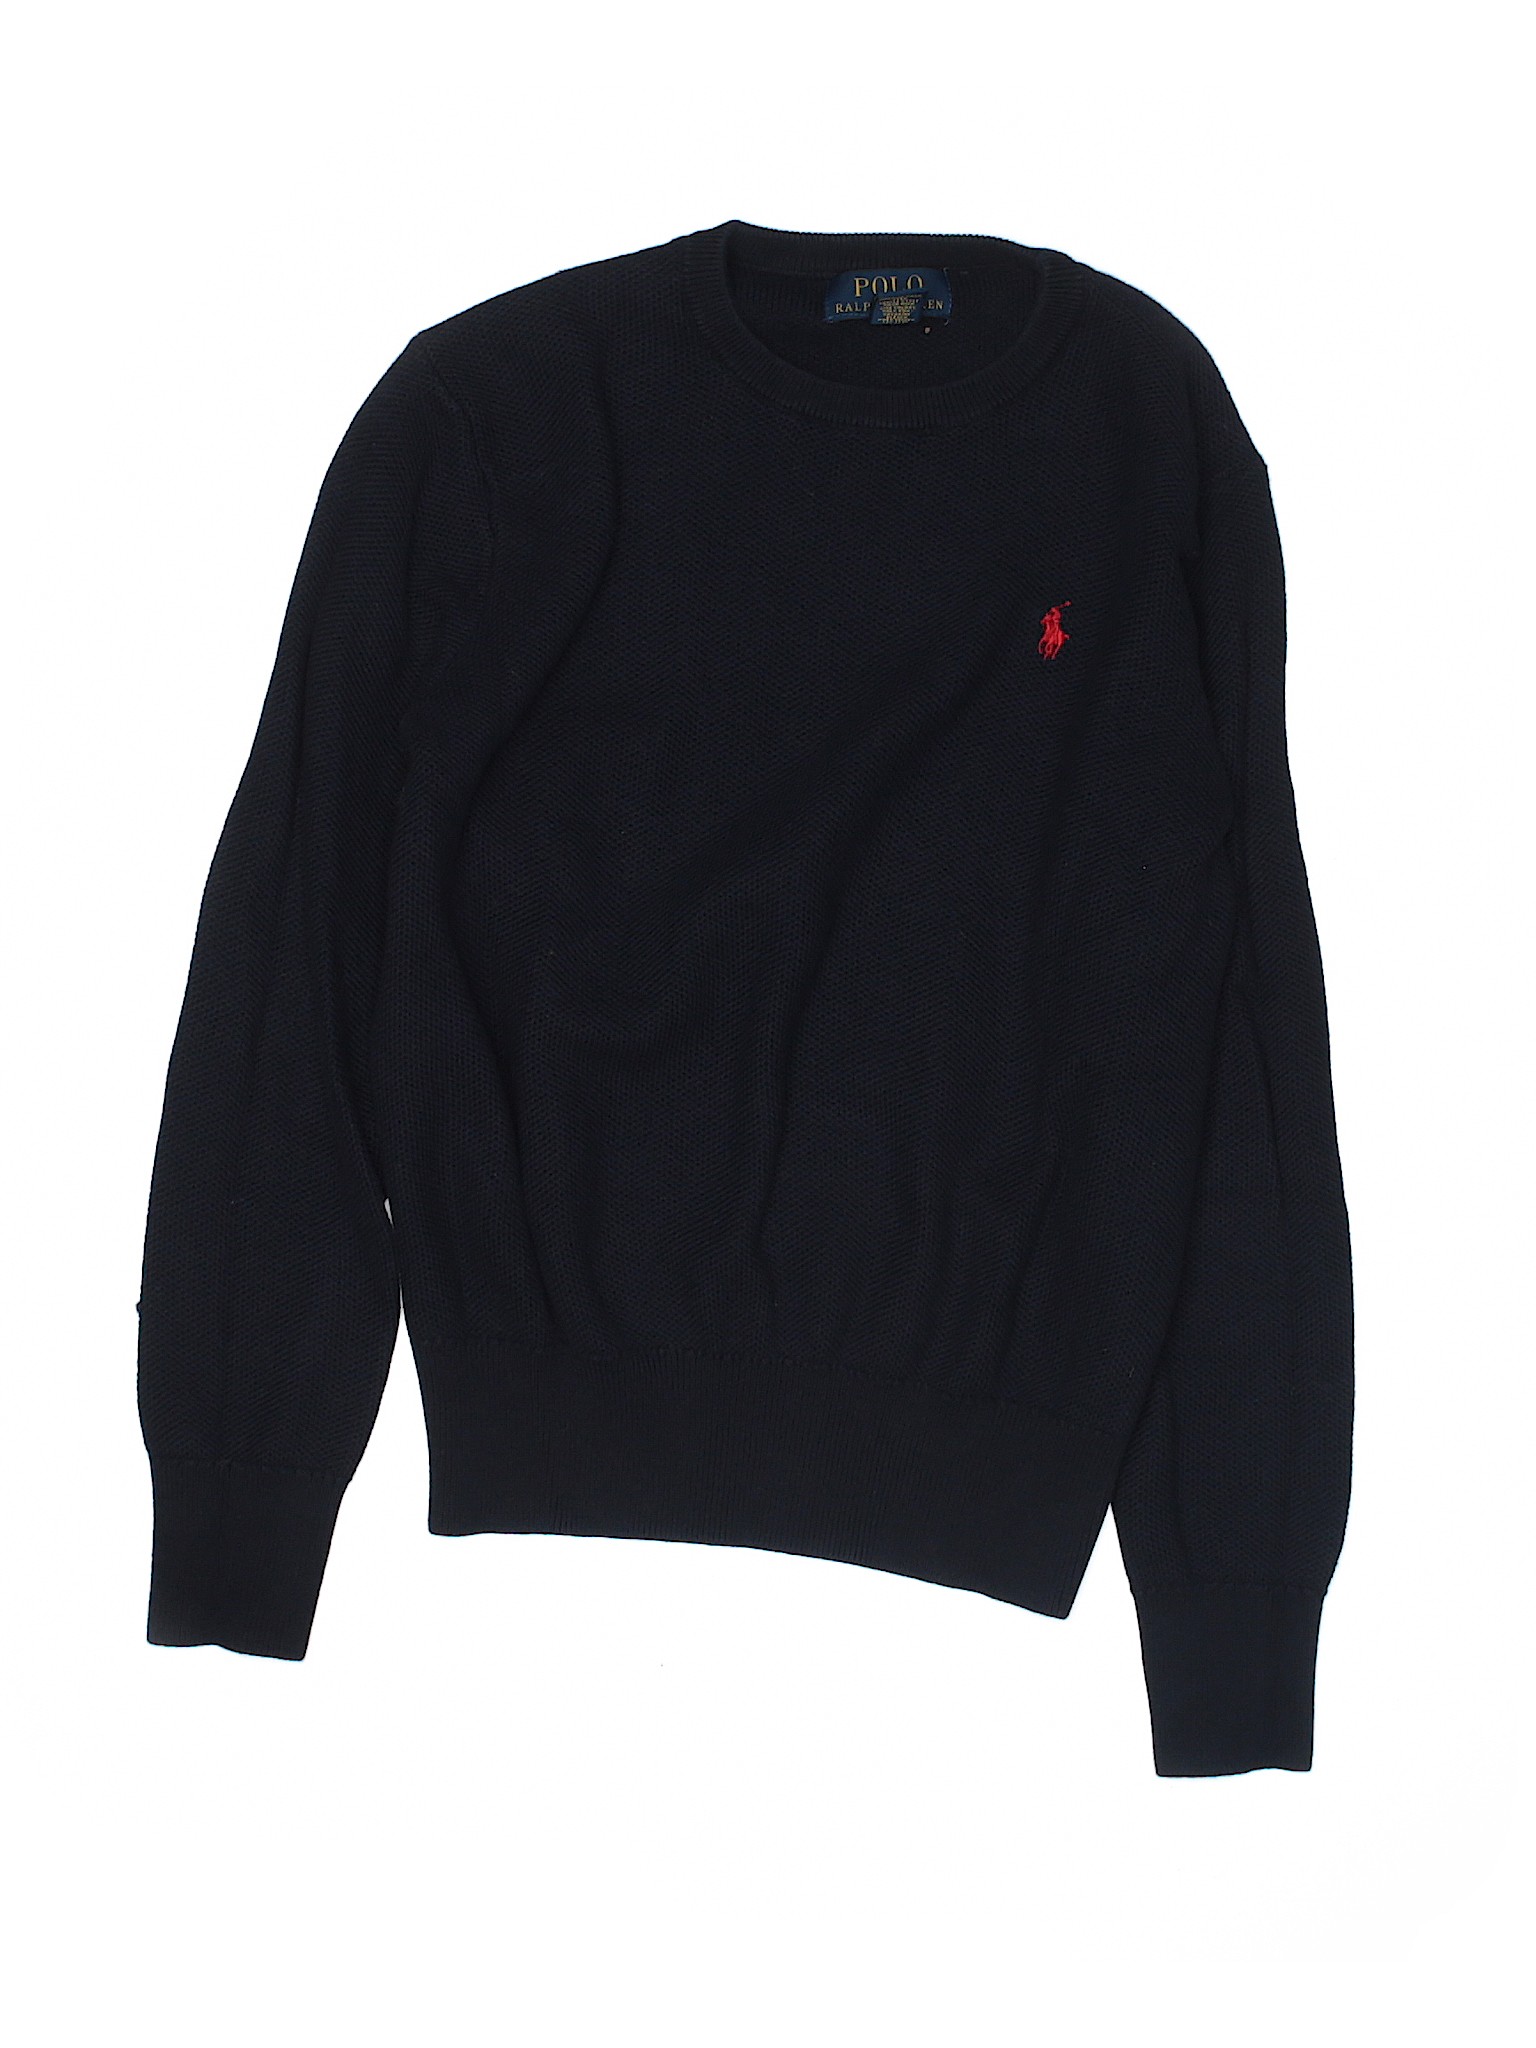 Polo by Ralph Lauren Boys Black Pullover Sweater 10 | eBay